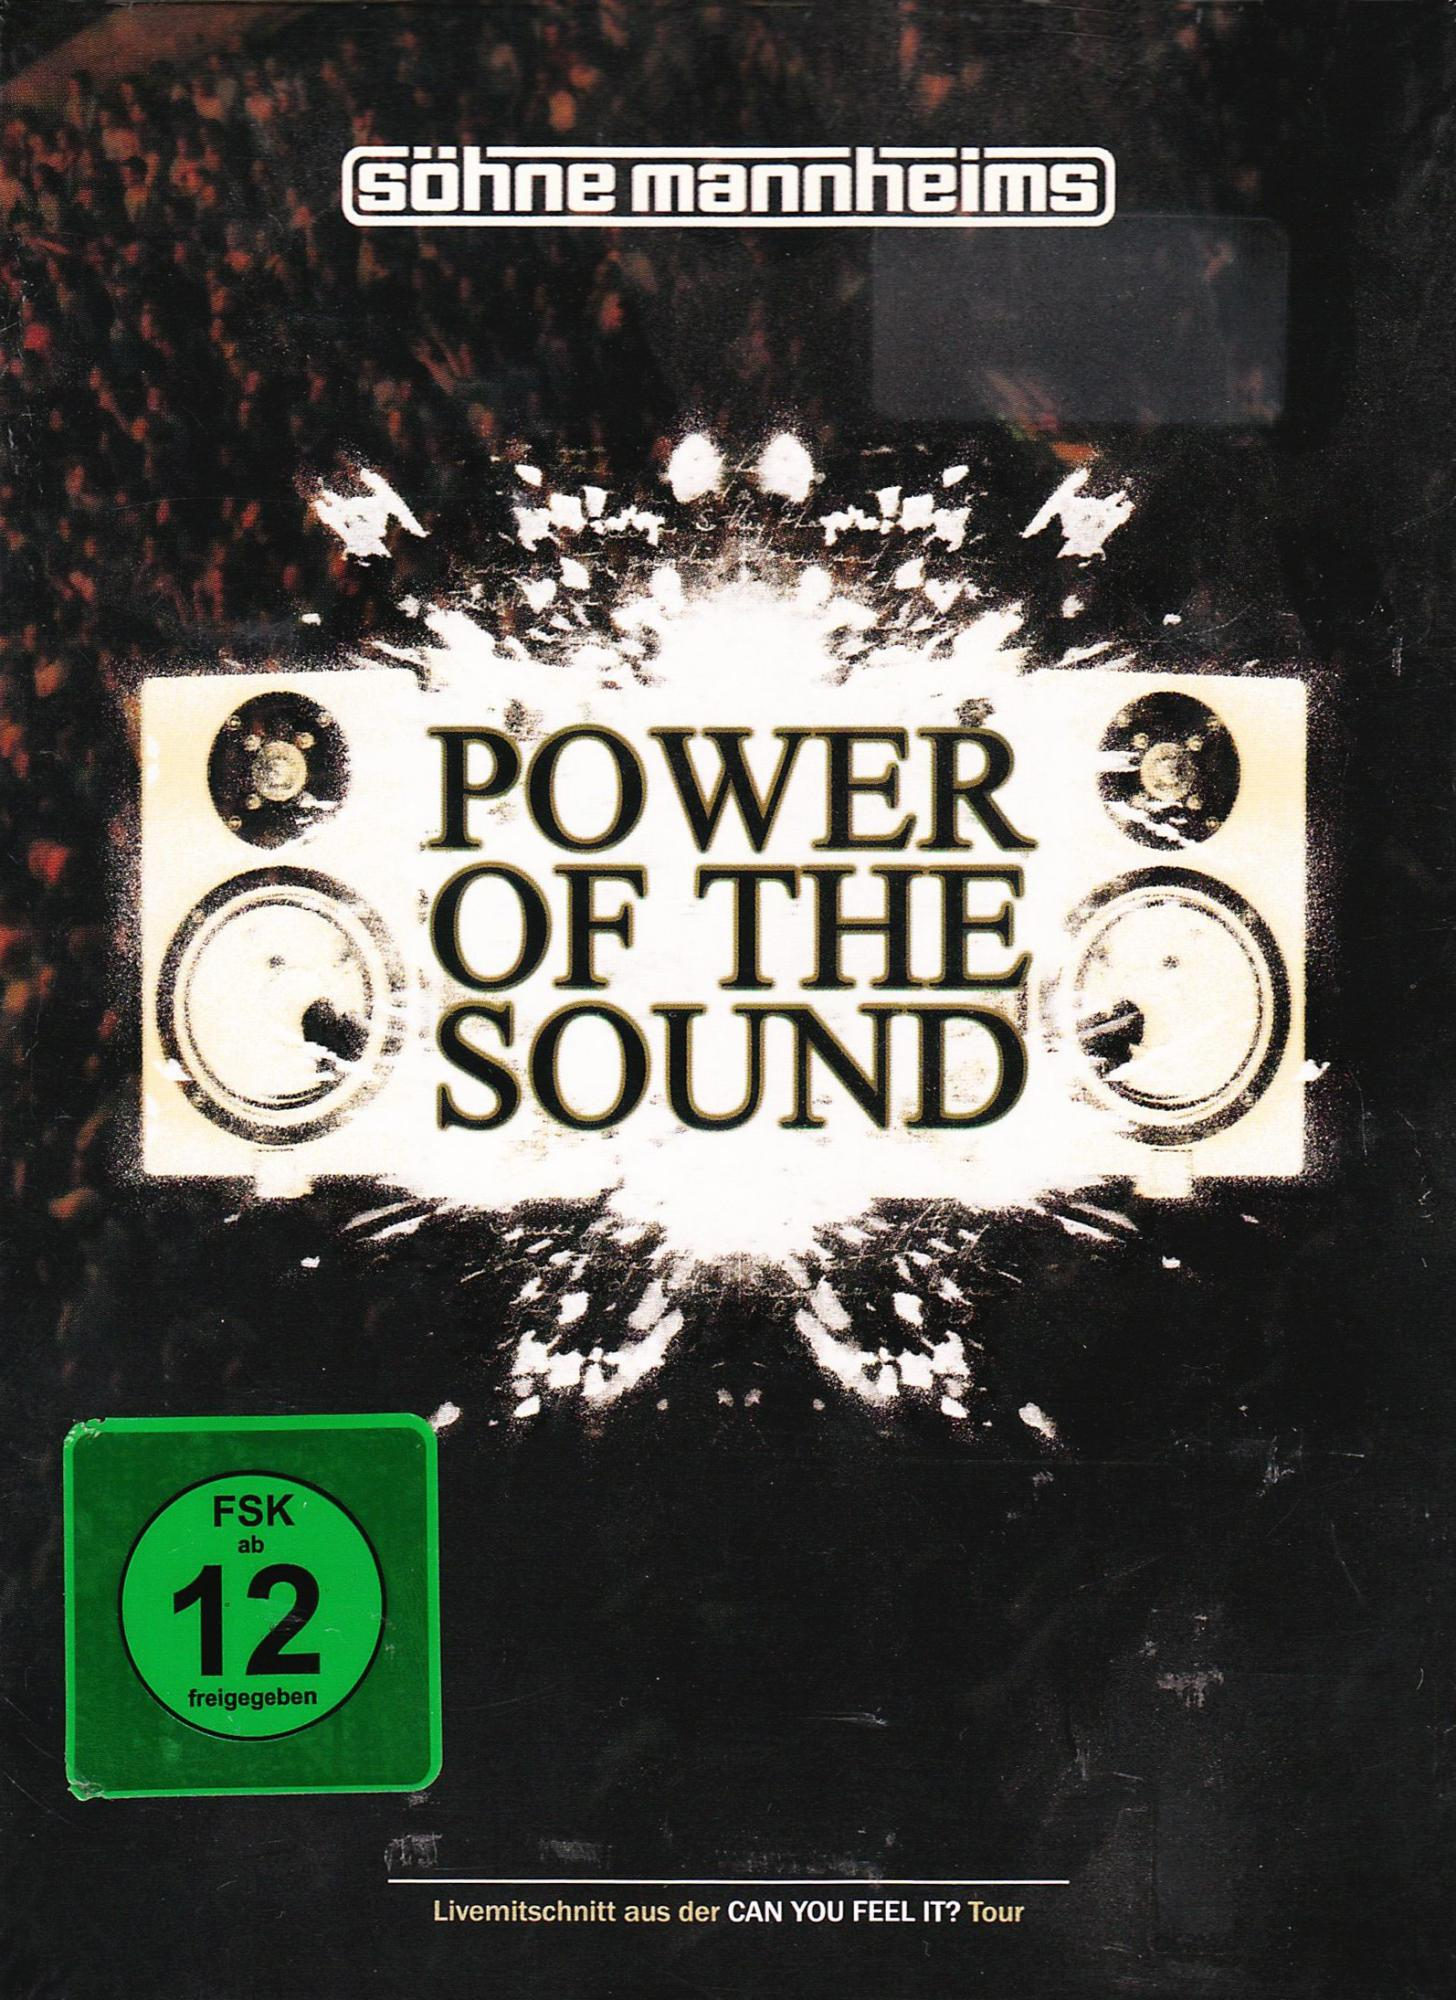 Söhne Of - - The - Sound Mannheims (DVD) Mannheims Power Söhne